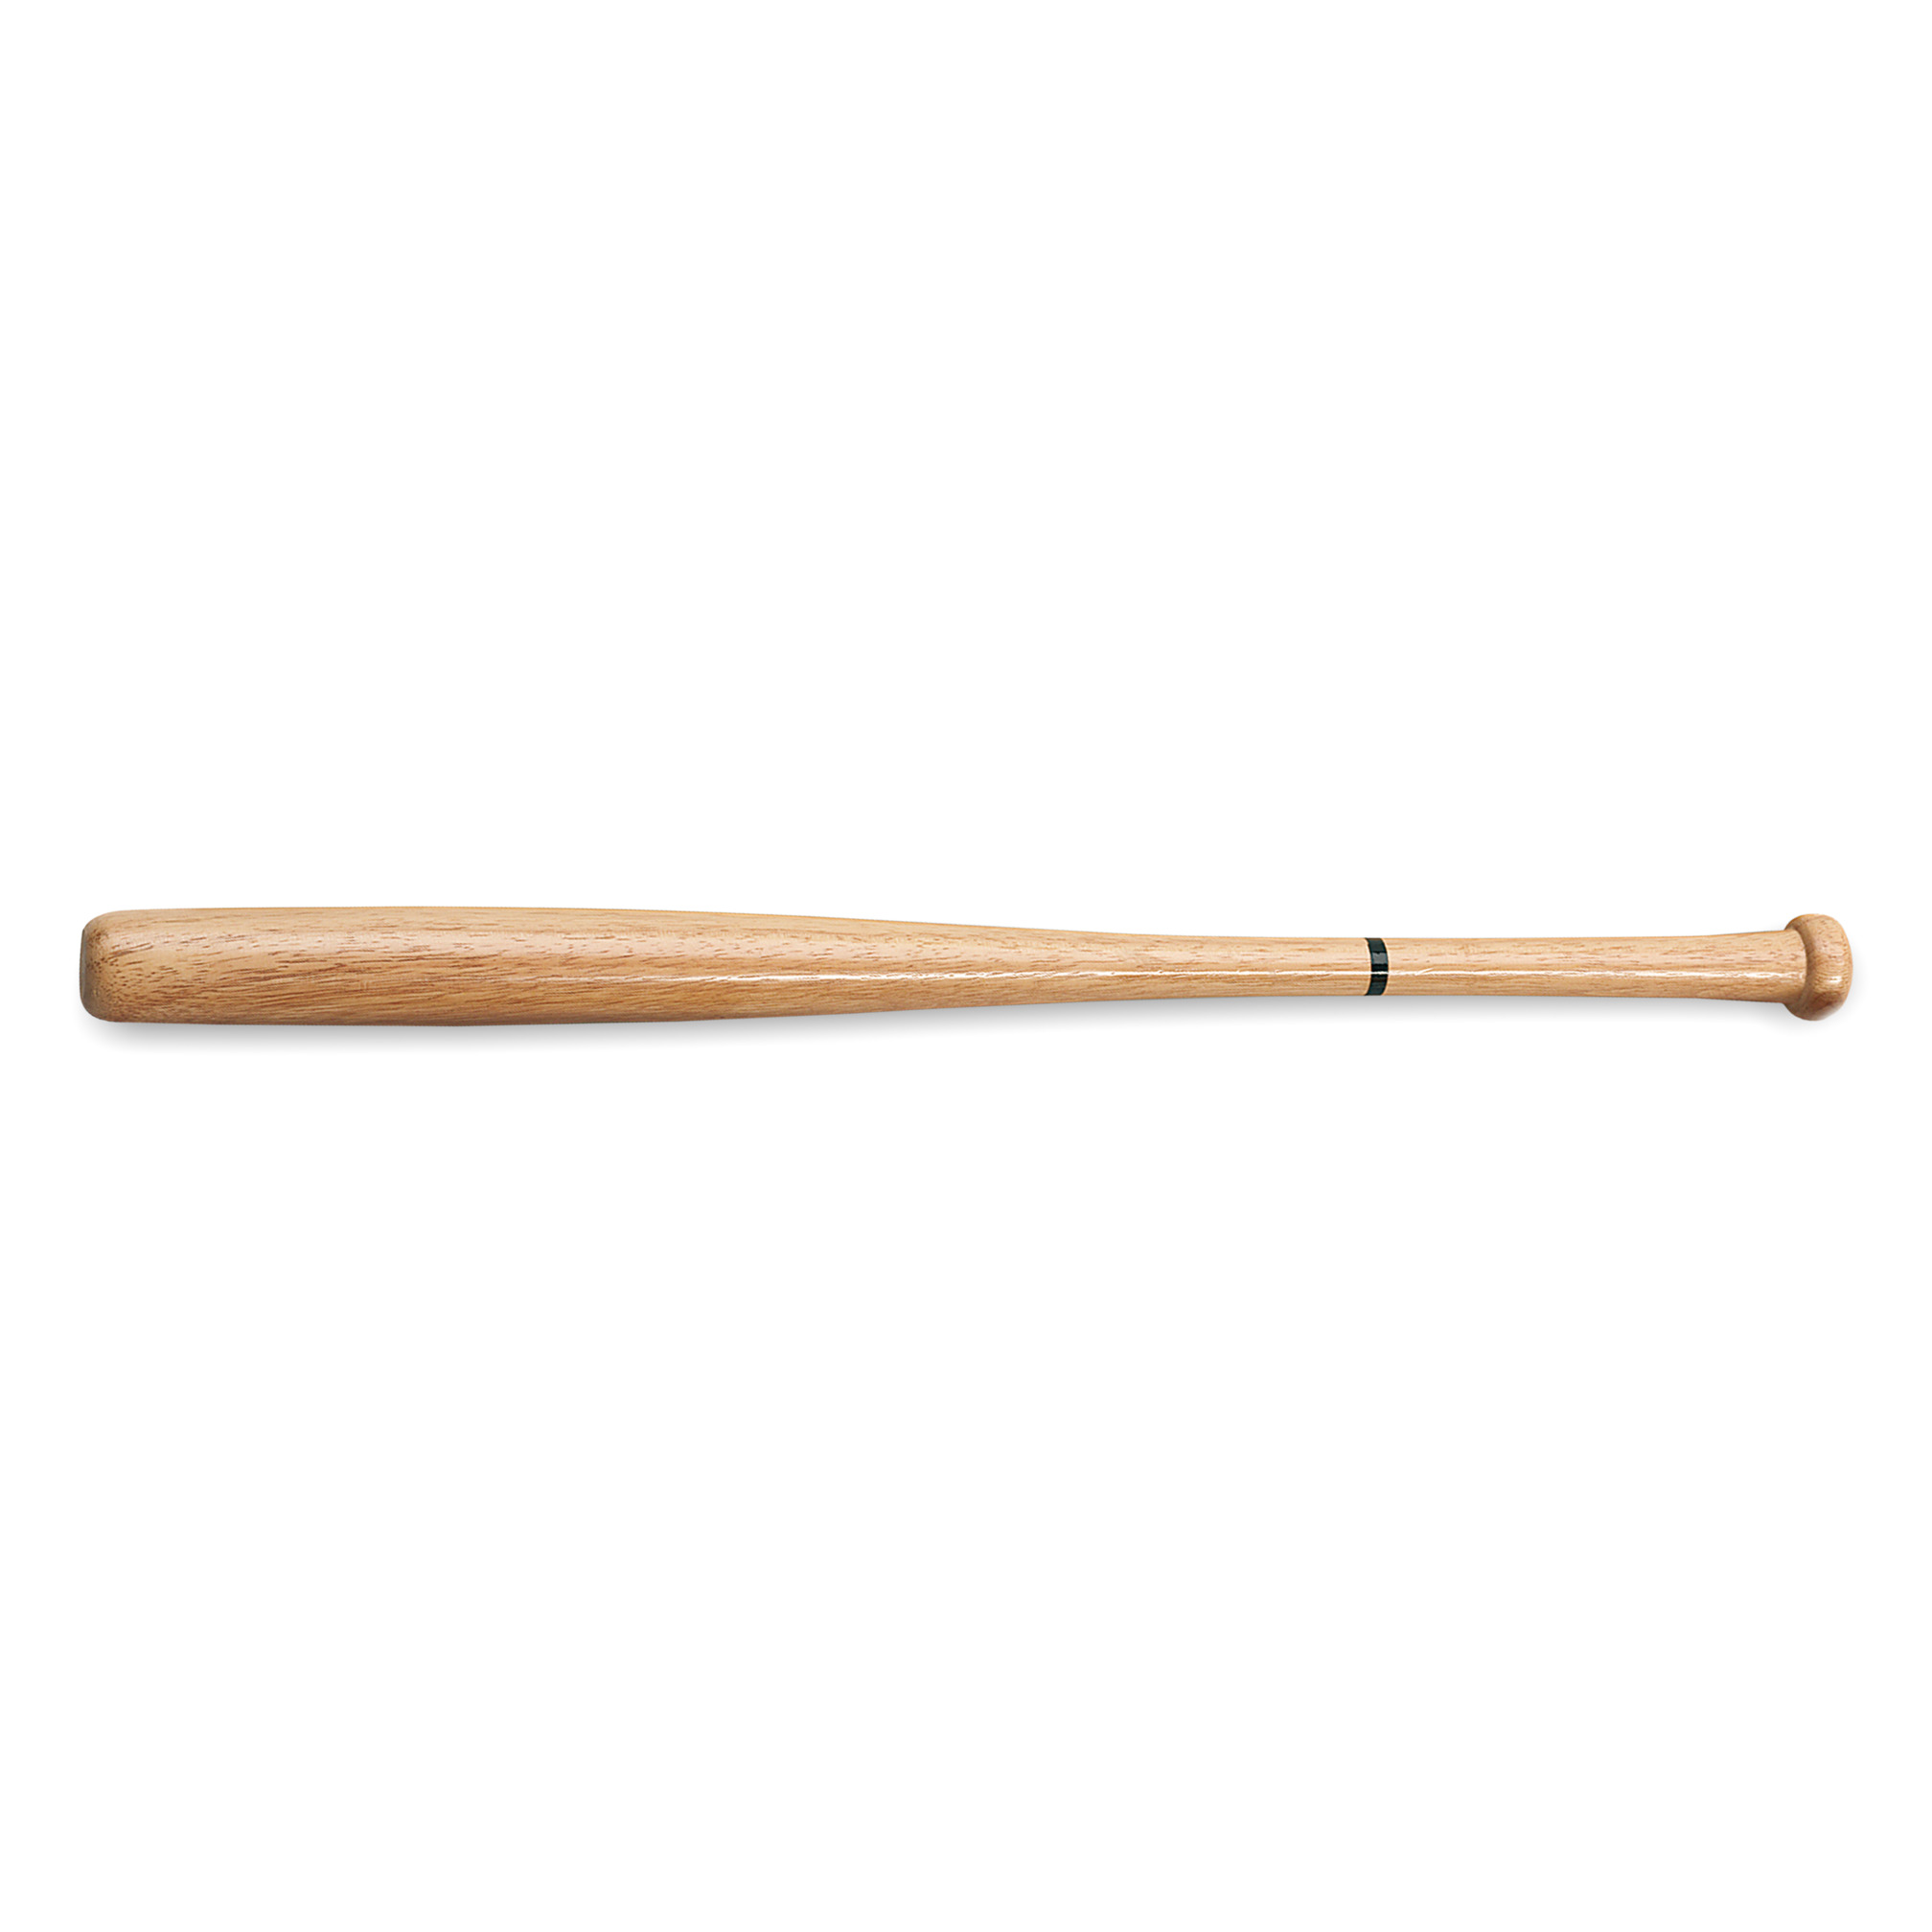 Softbalknuppel hout, 28 inch